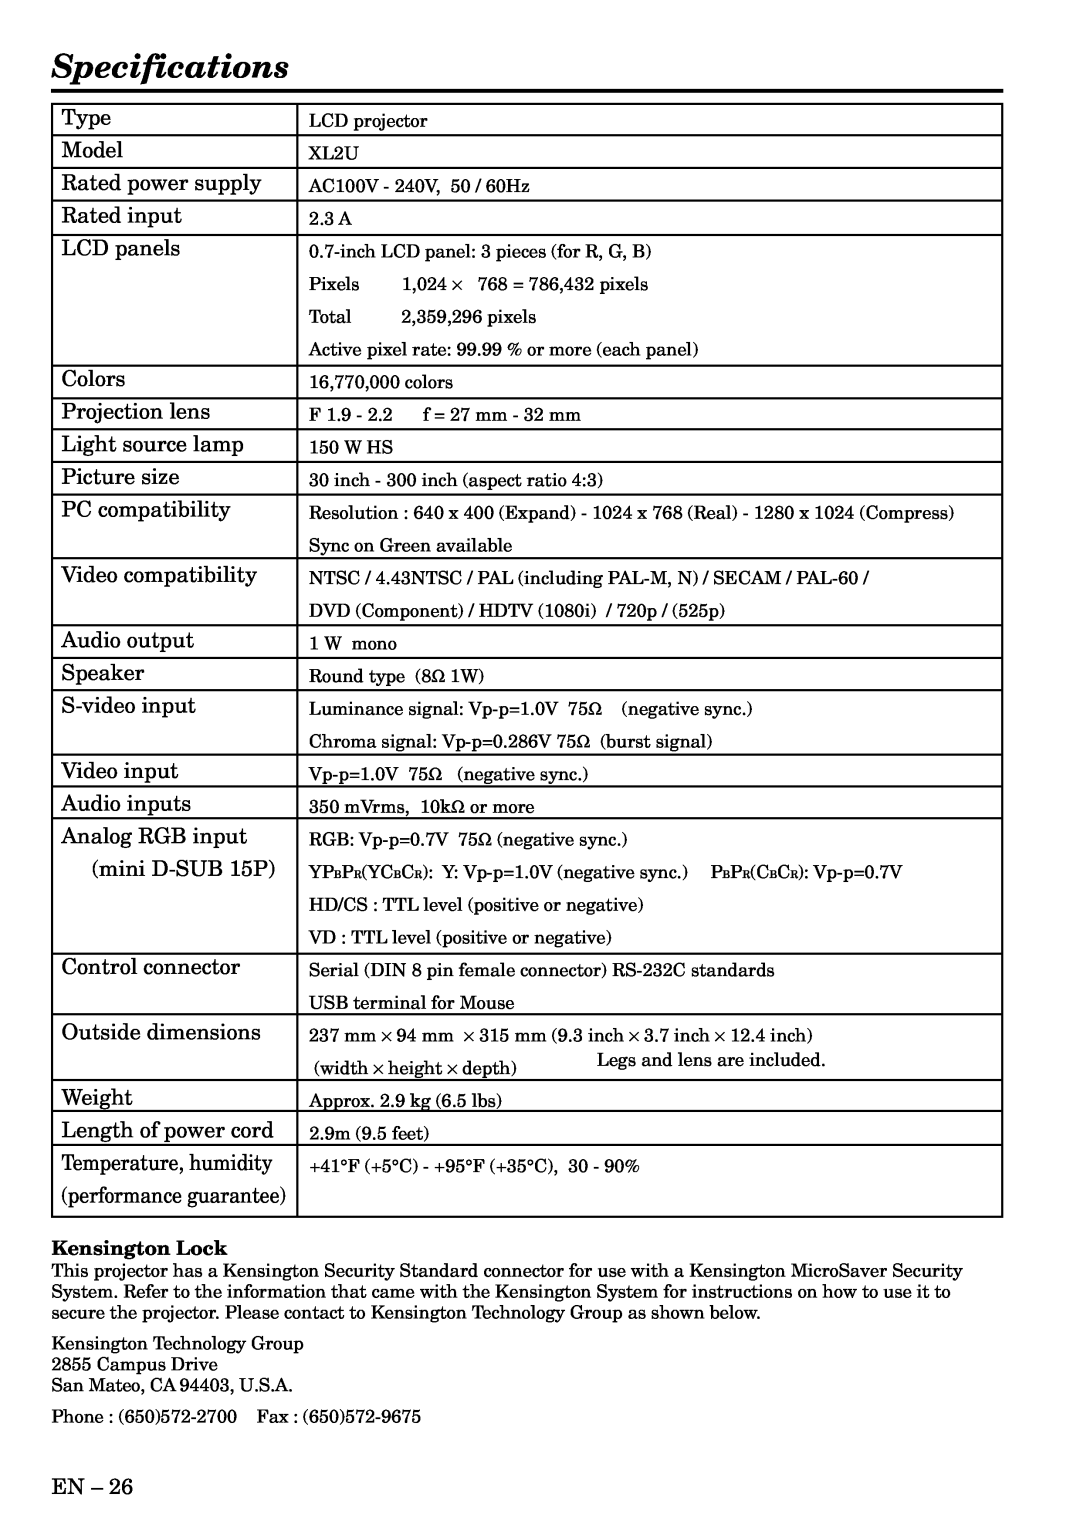 Mitsubishi Electronics XL2U user manual Specifications, Kensington Lock 